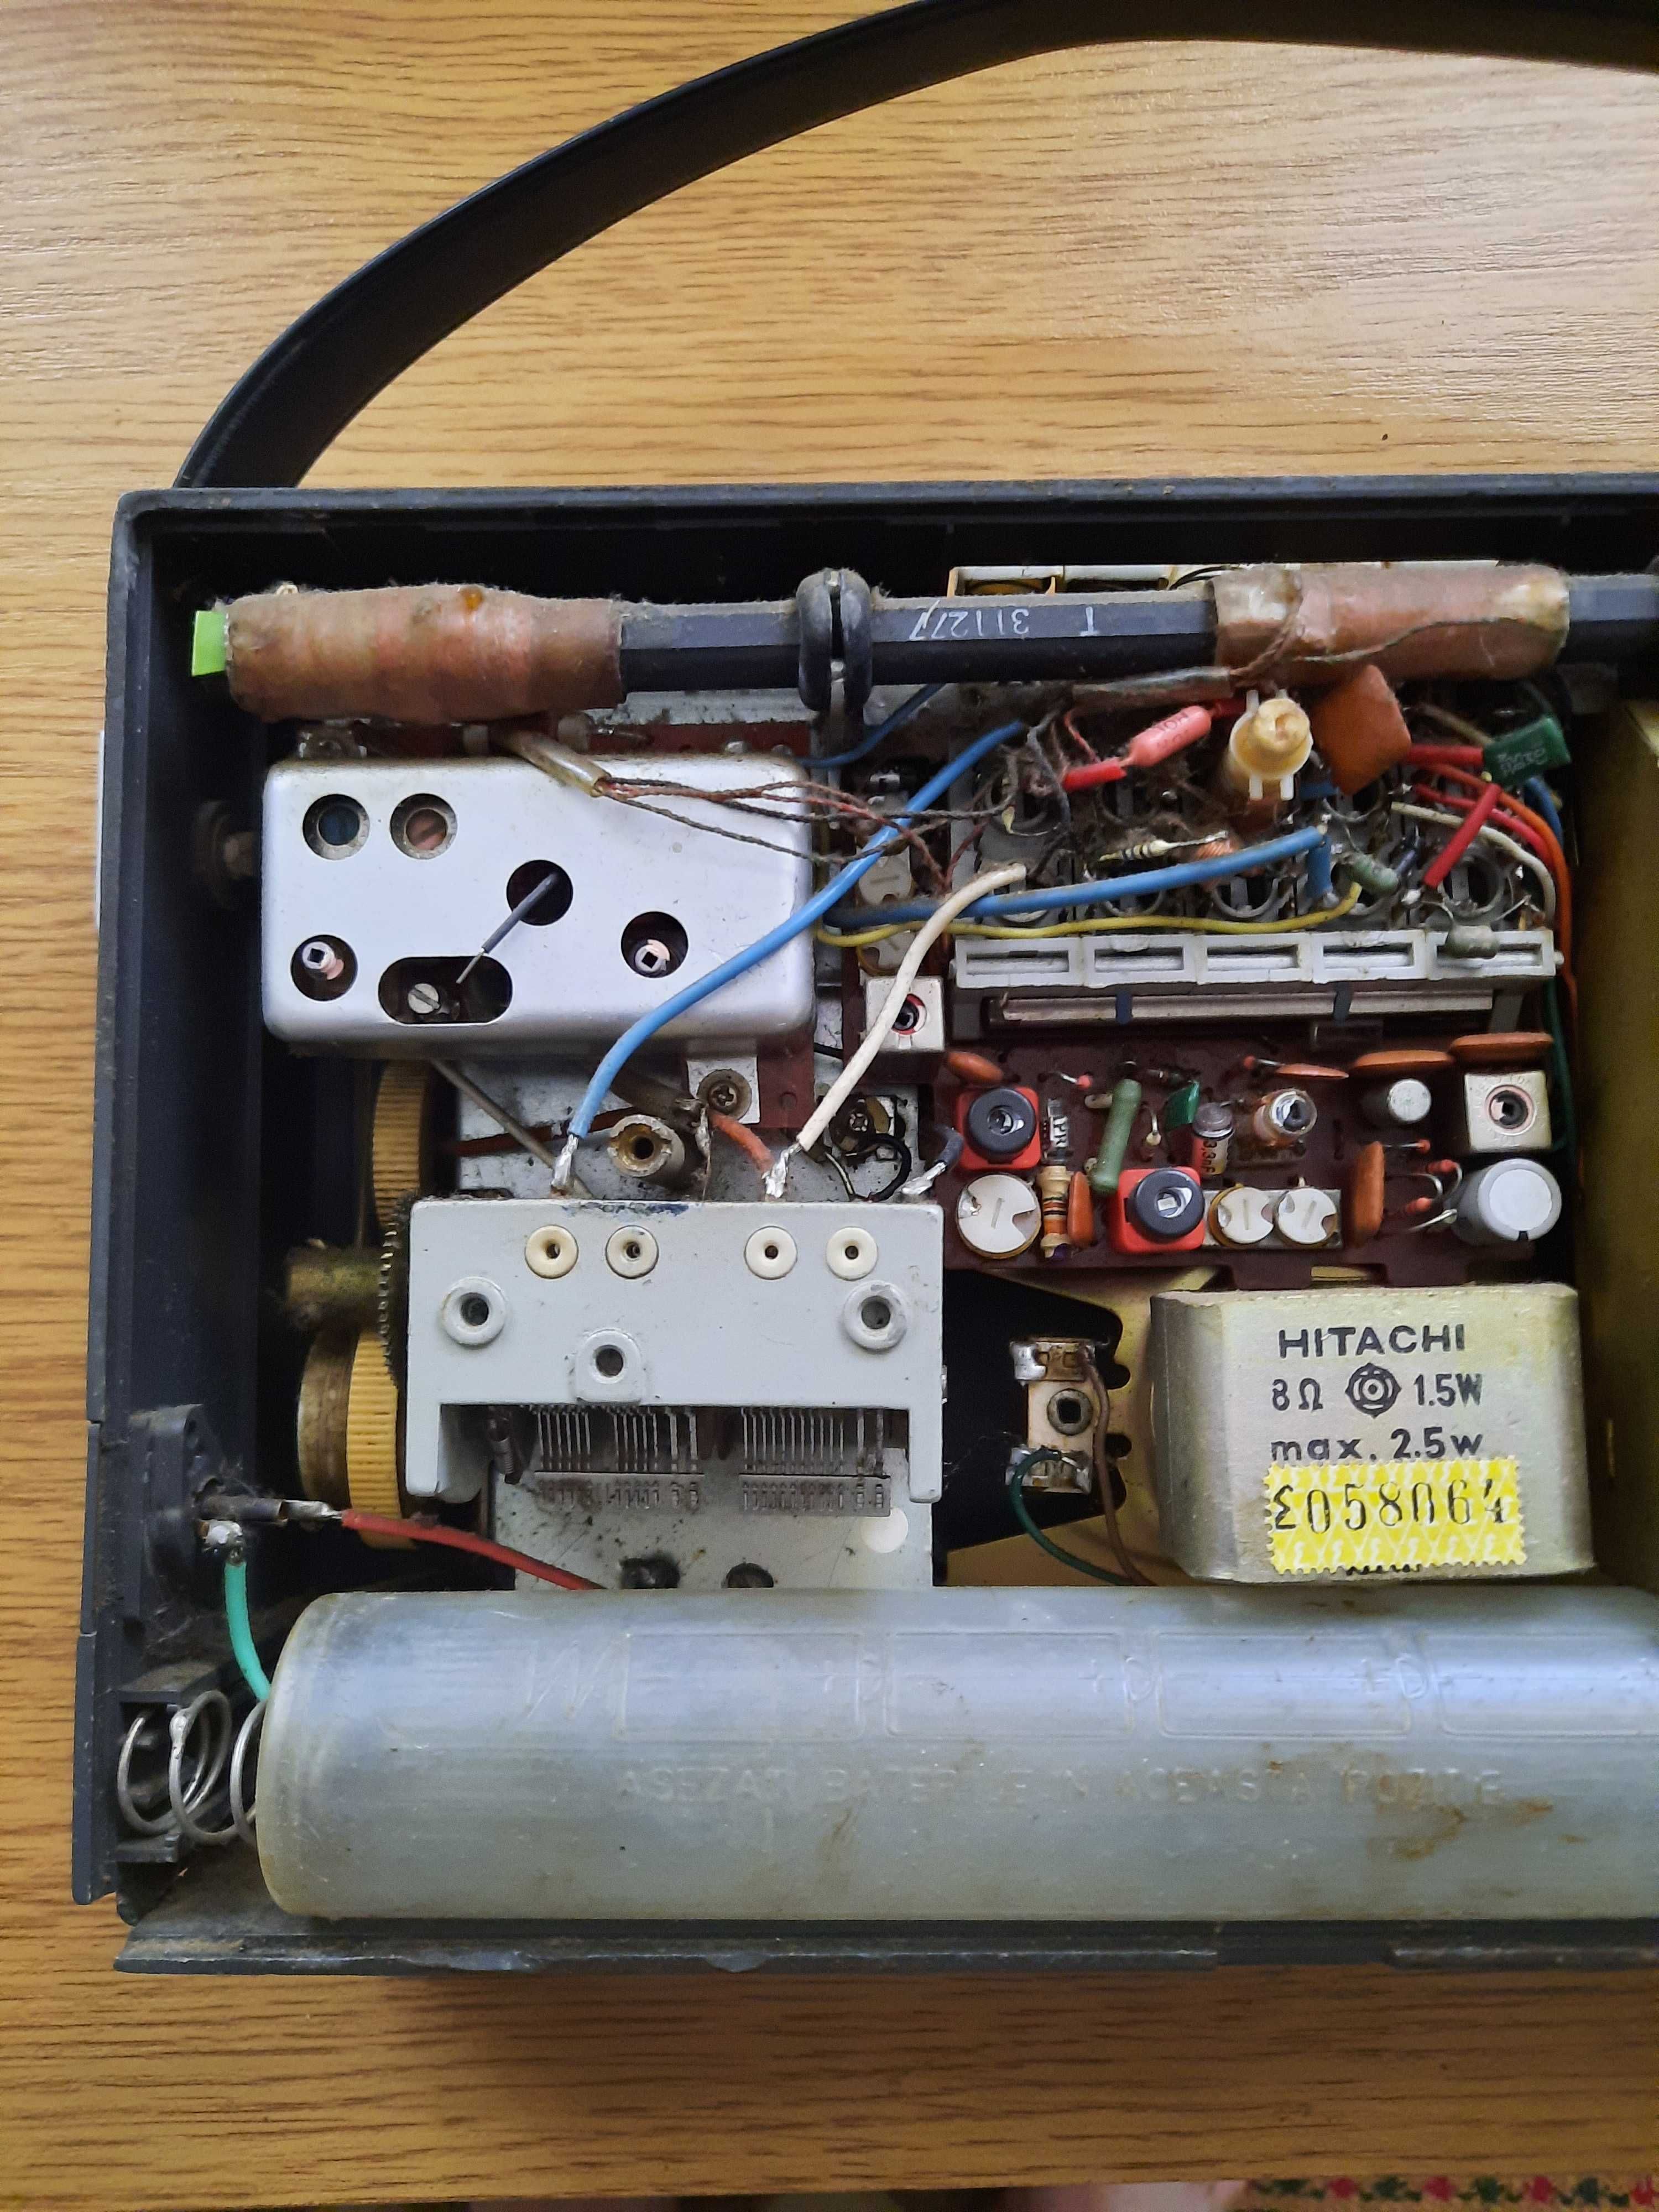 Electrica S651T,  aparat de radio vechi pe tranzistori, vintage, retro